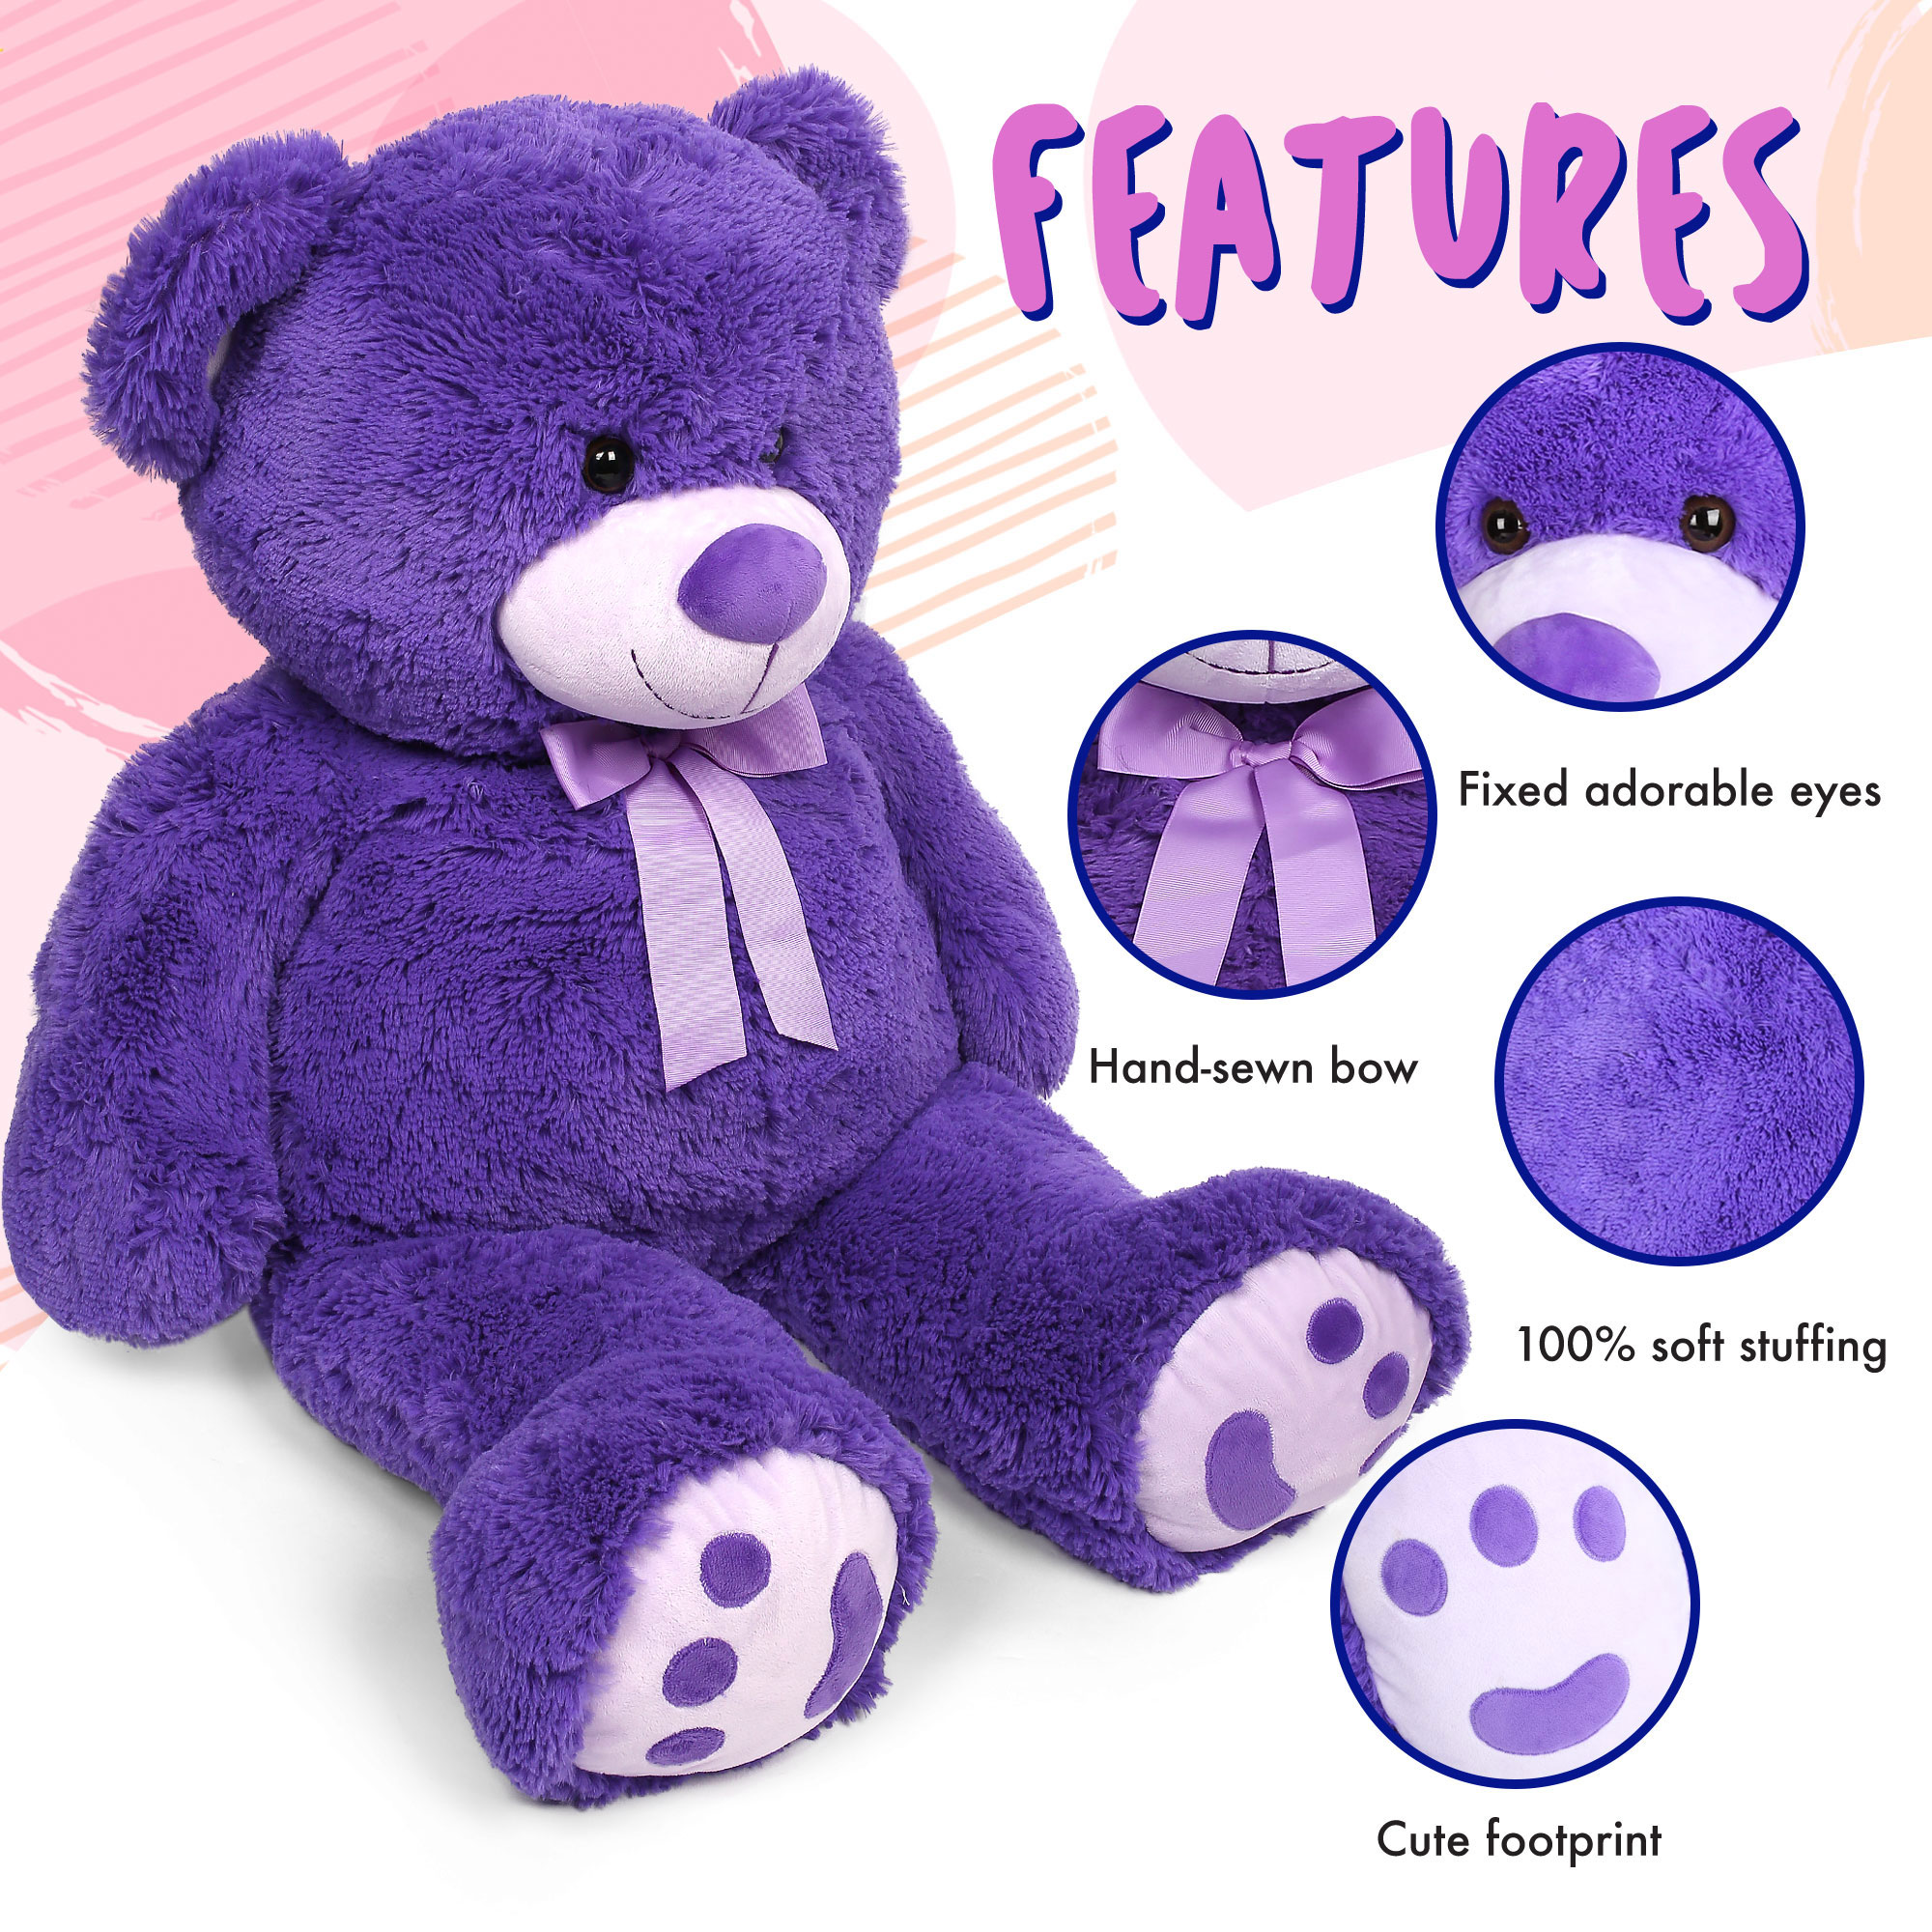 LotFancy 39" Giant Teddy Bear Stuffed Animal, Bear Plush Toy with Footprints for Kids Adult, Purple - image 4 of 9